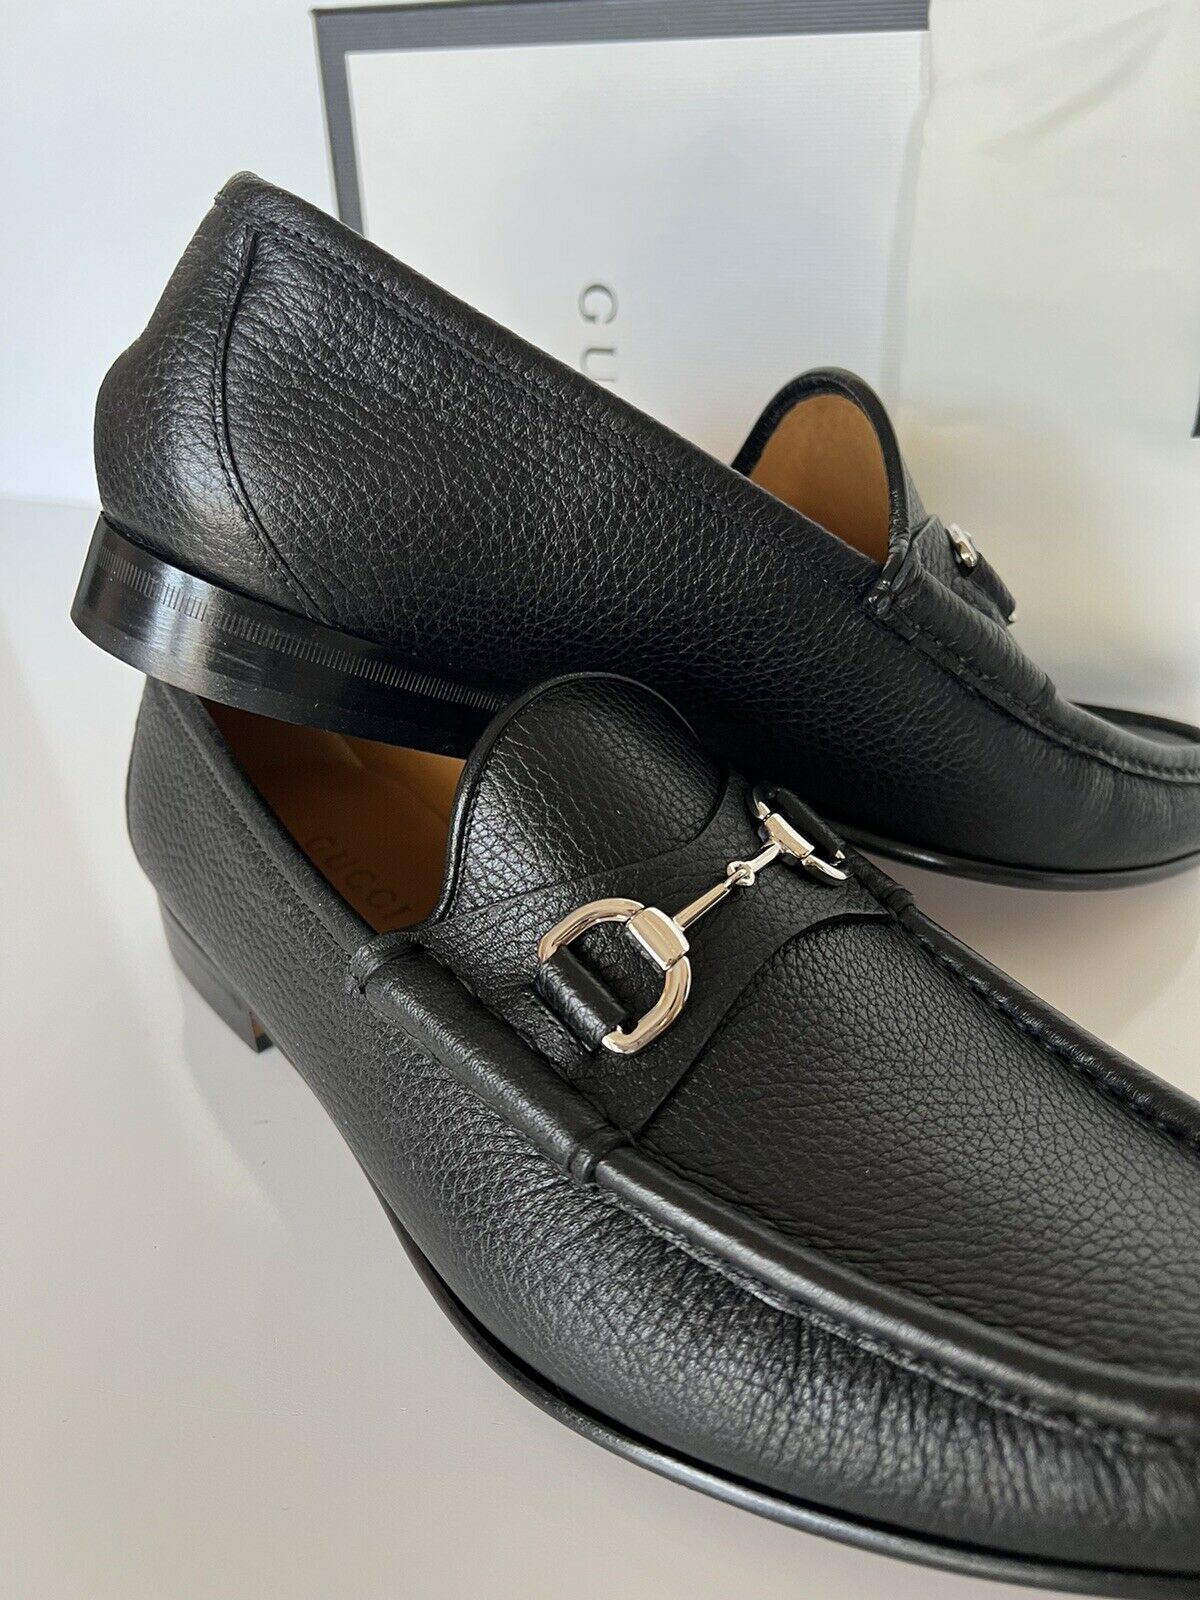 Gucci Men's Horsebit Leather Loafer